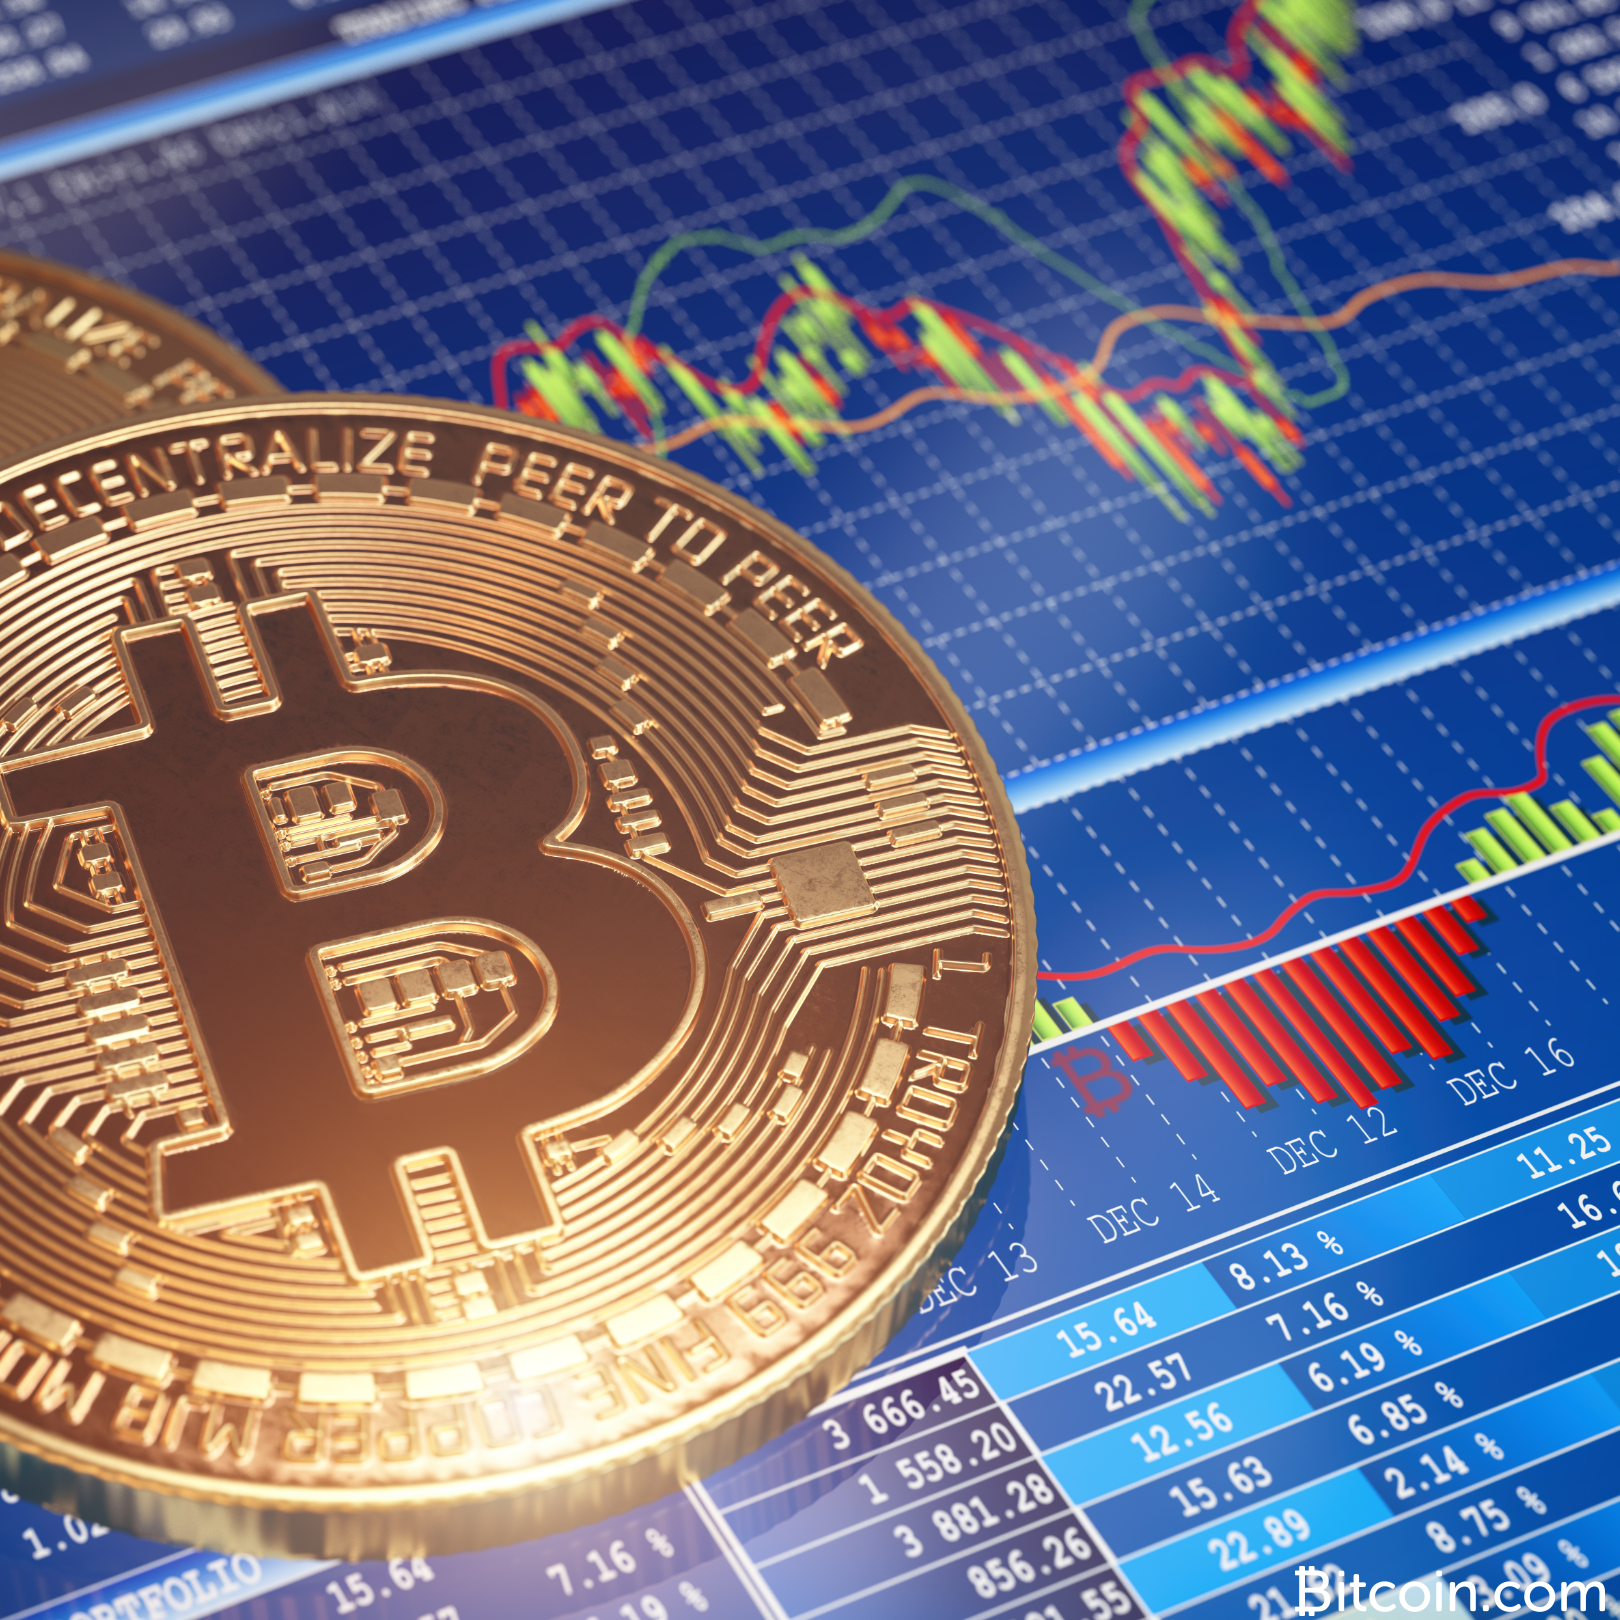 South Korean Court Rules Bitcoin Has Economic Value - Bitcoin News